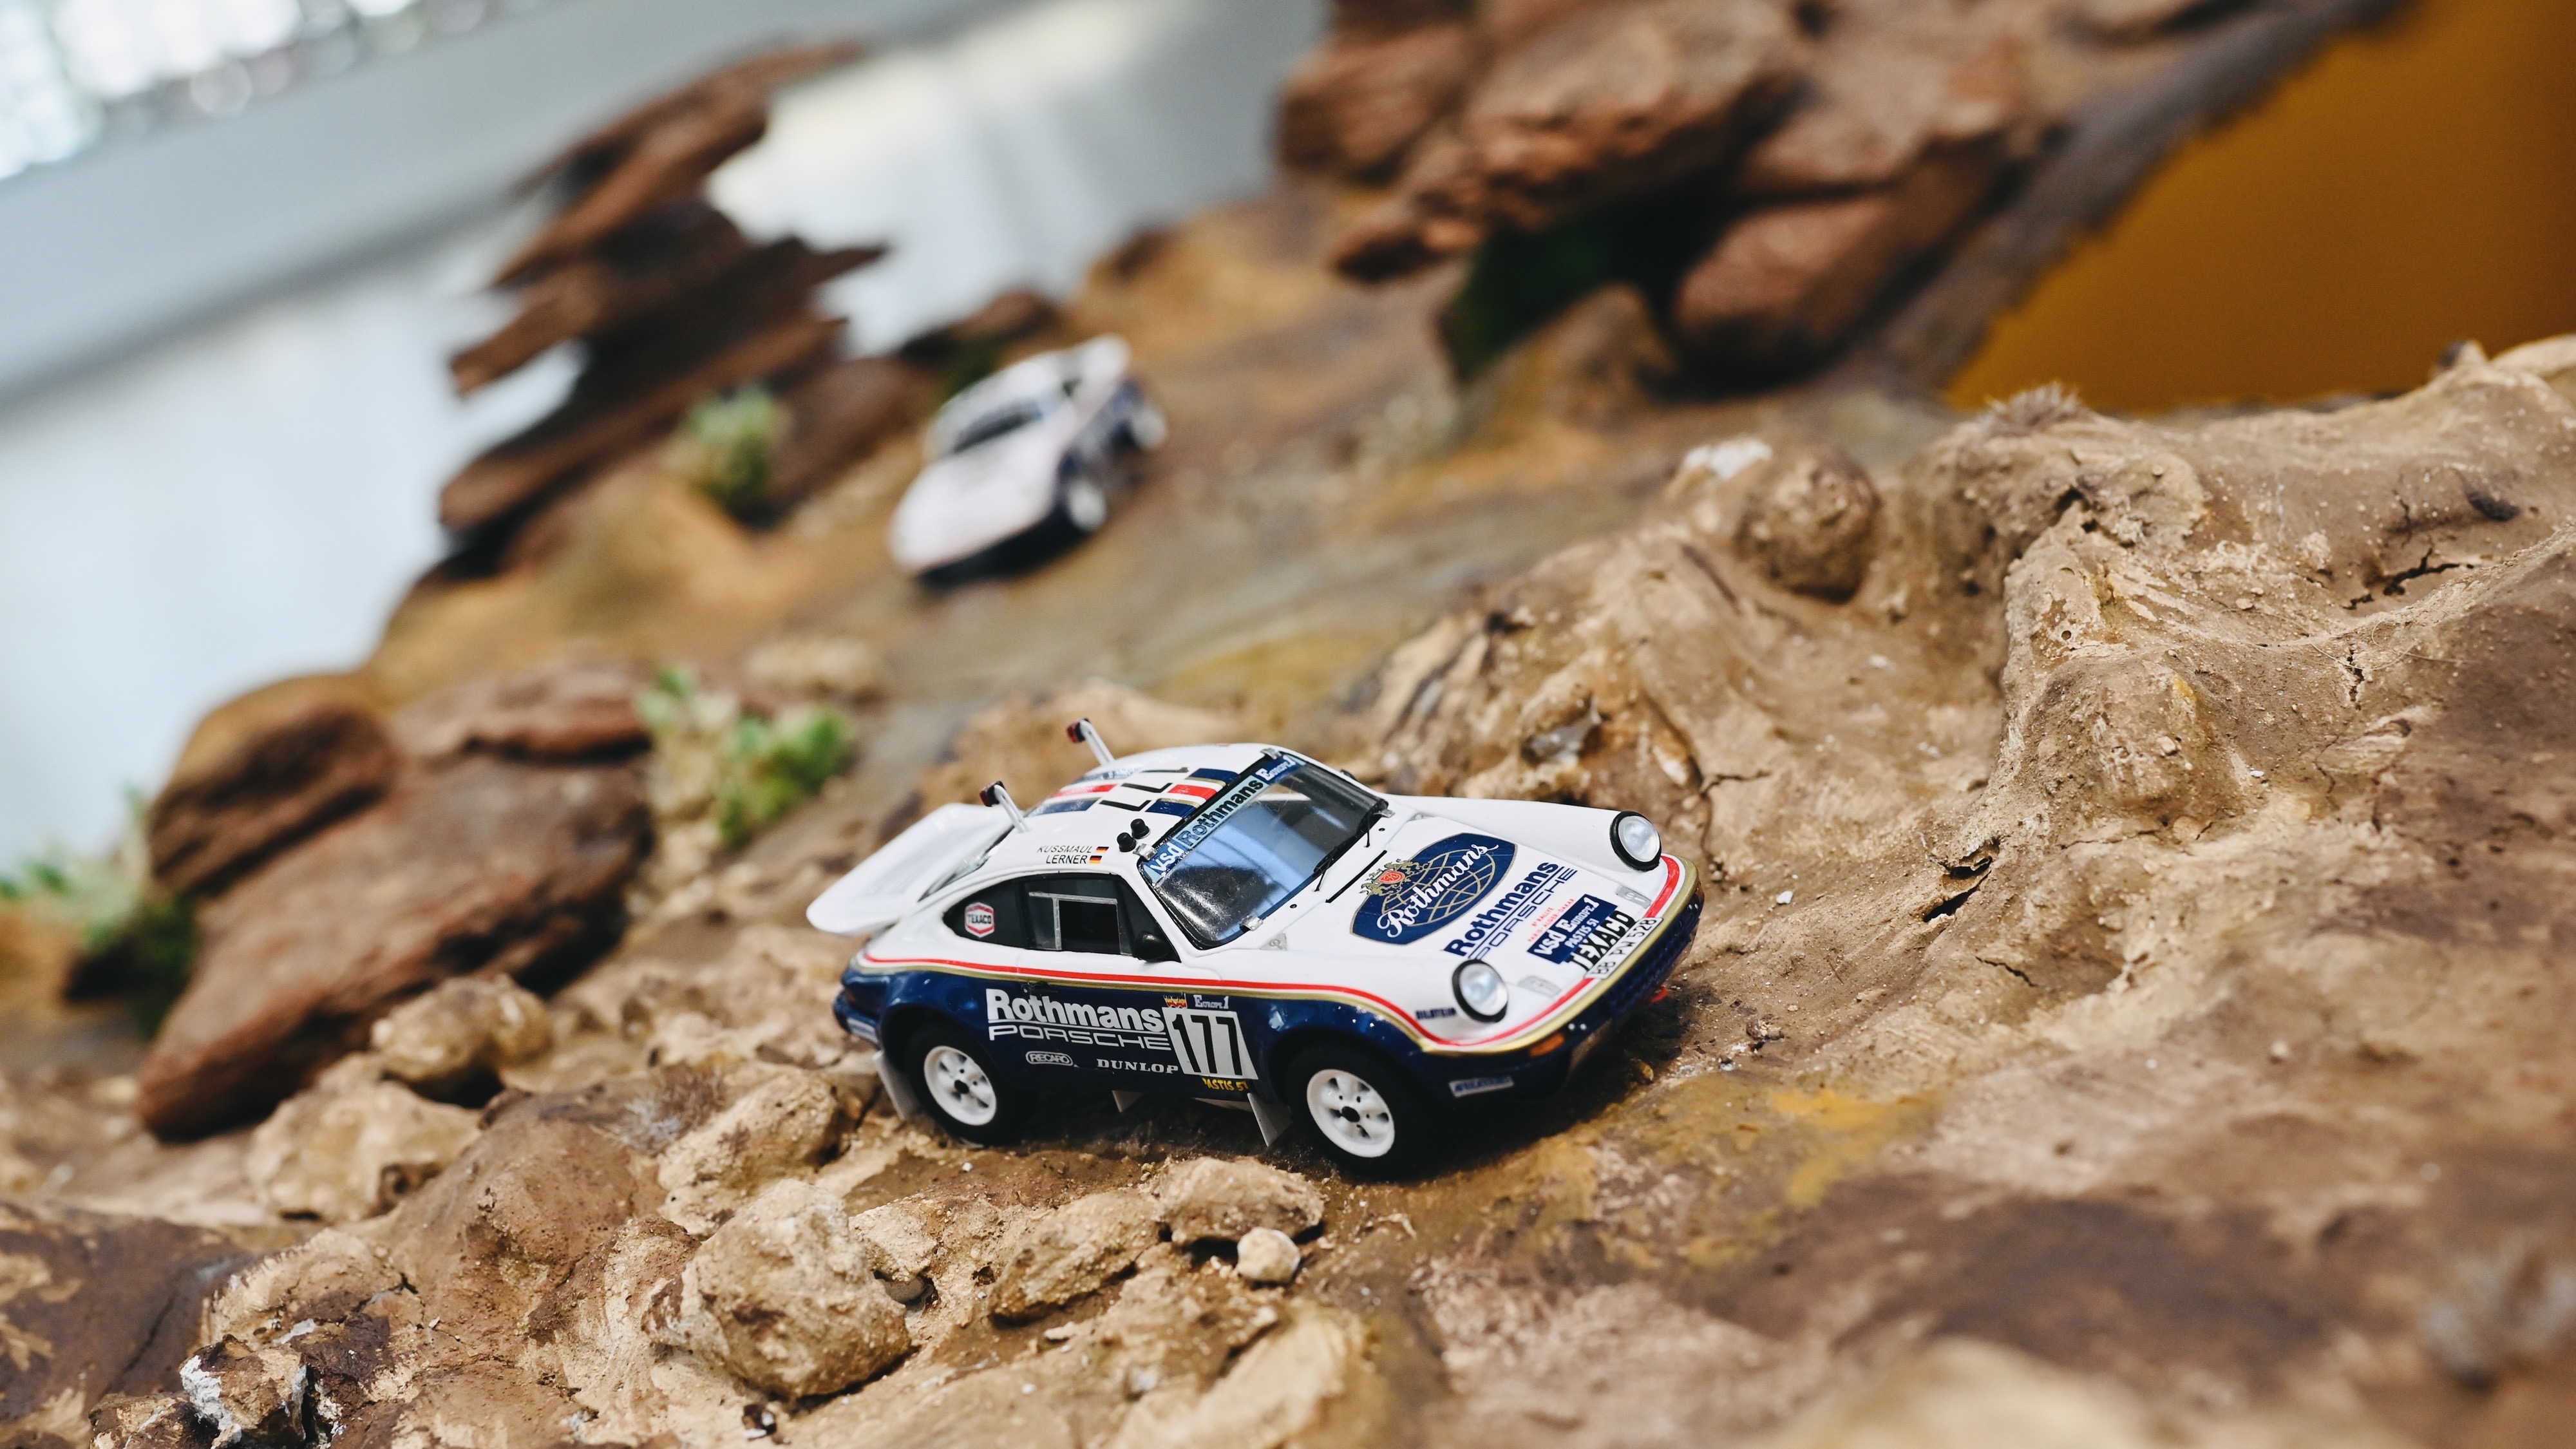 Small scale model of Rothmans Porsche 911 (953) Paris-Dakar car